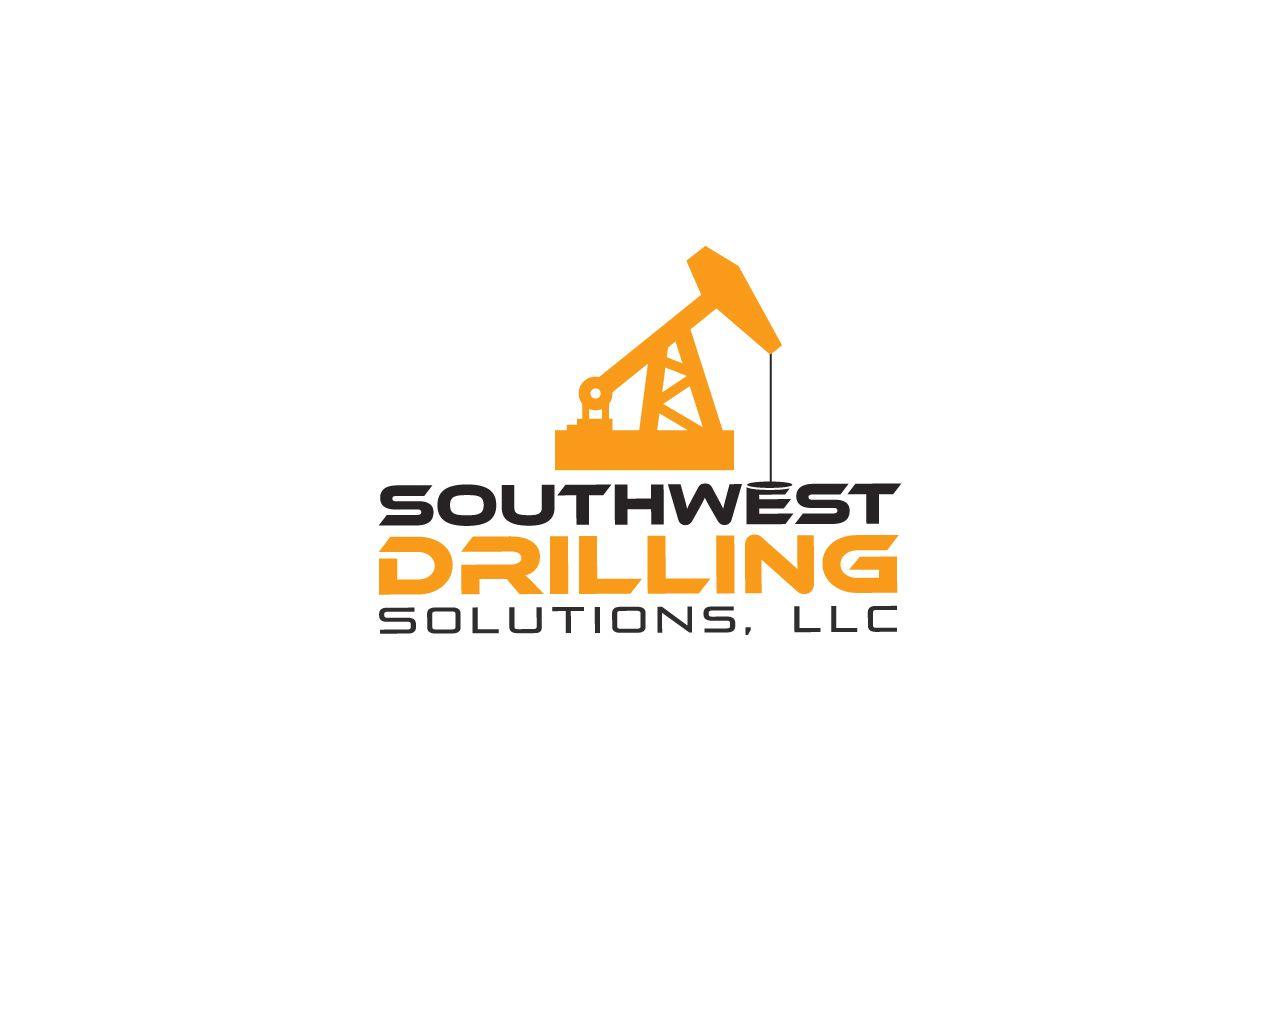 Service Oil Company Logo - Elegant, Playful, Oil And Gas Logo Design for Southwest Drilling ...